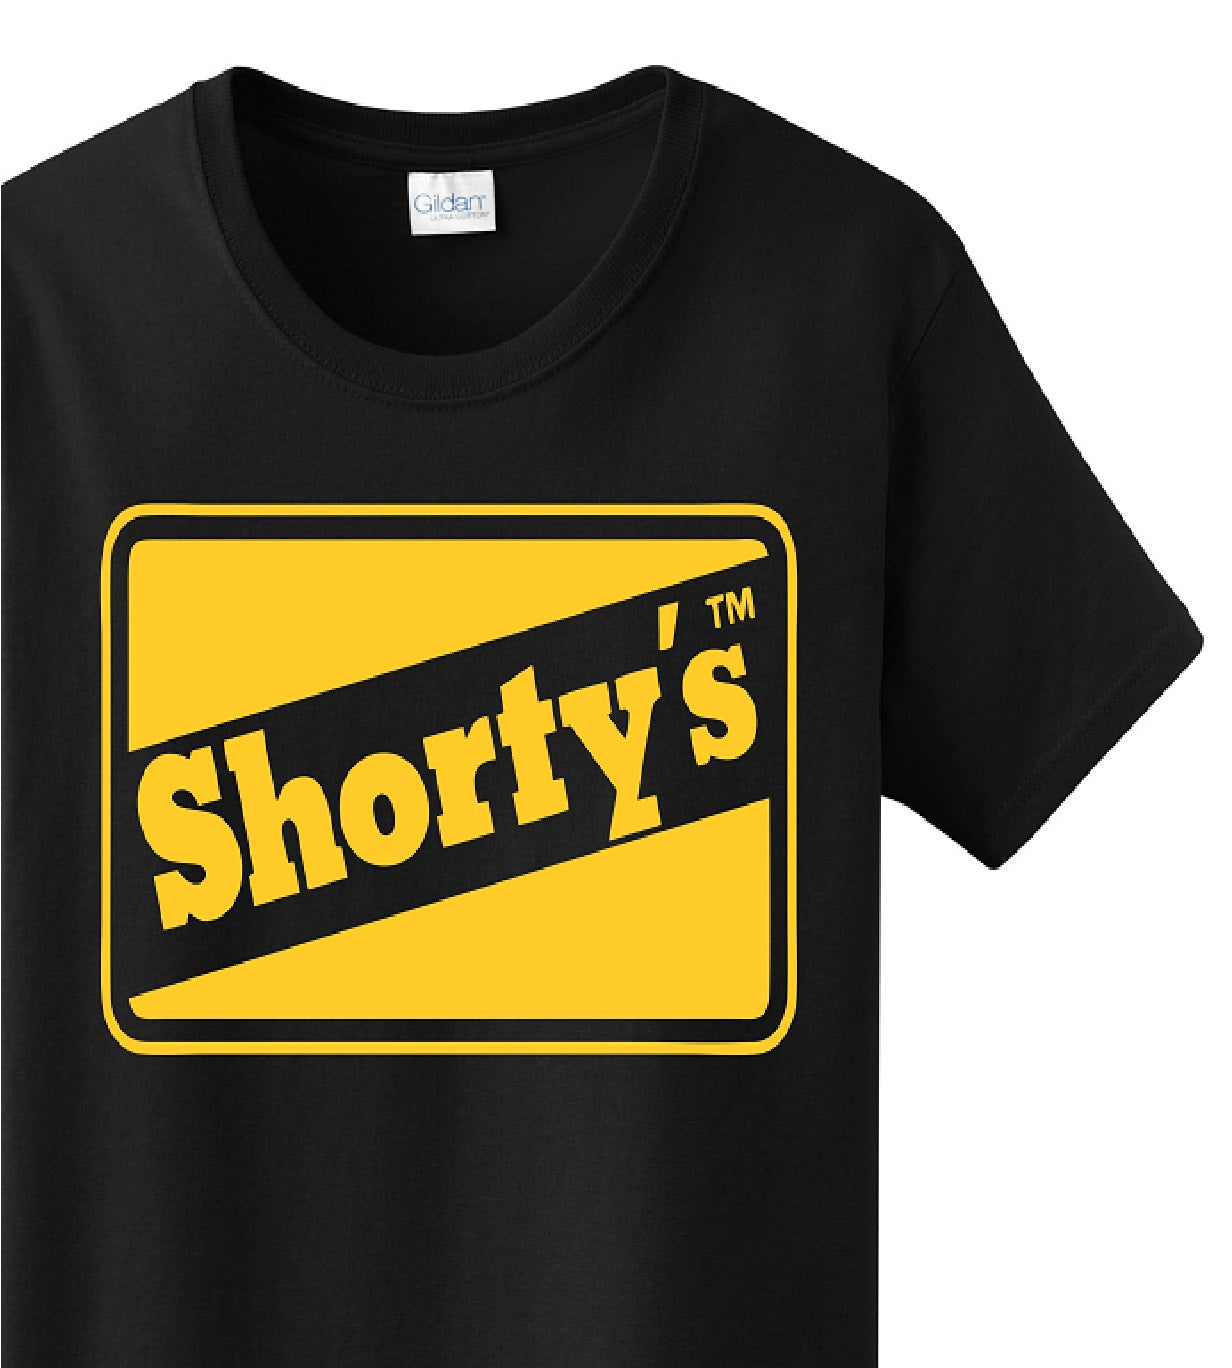 Skate Men's Shirt -Shorty's (Black) -Yellow - MYSTYLEMYCLOTHING